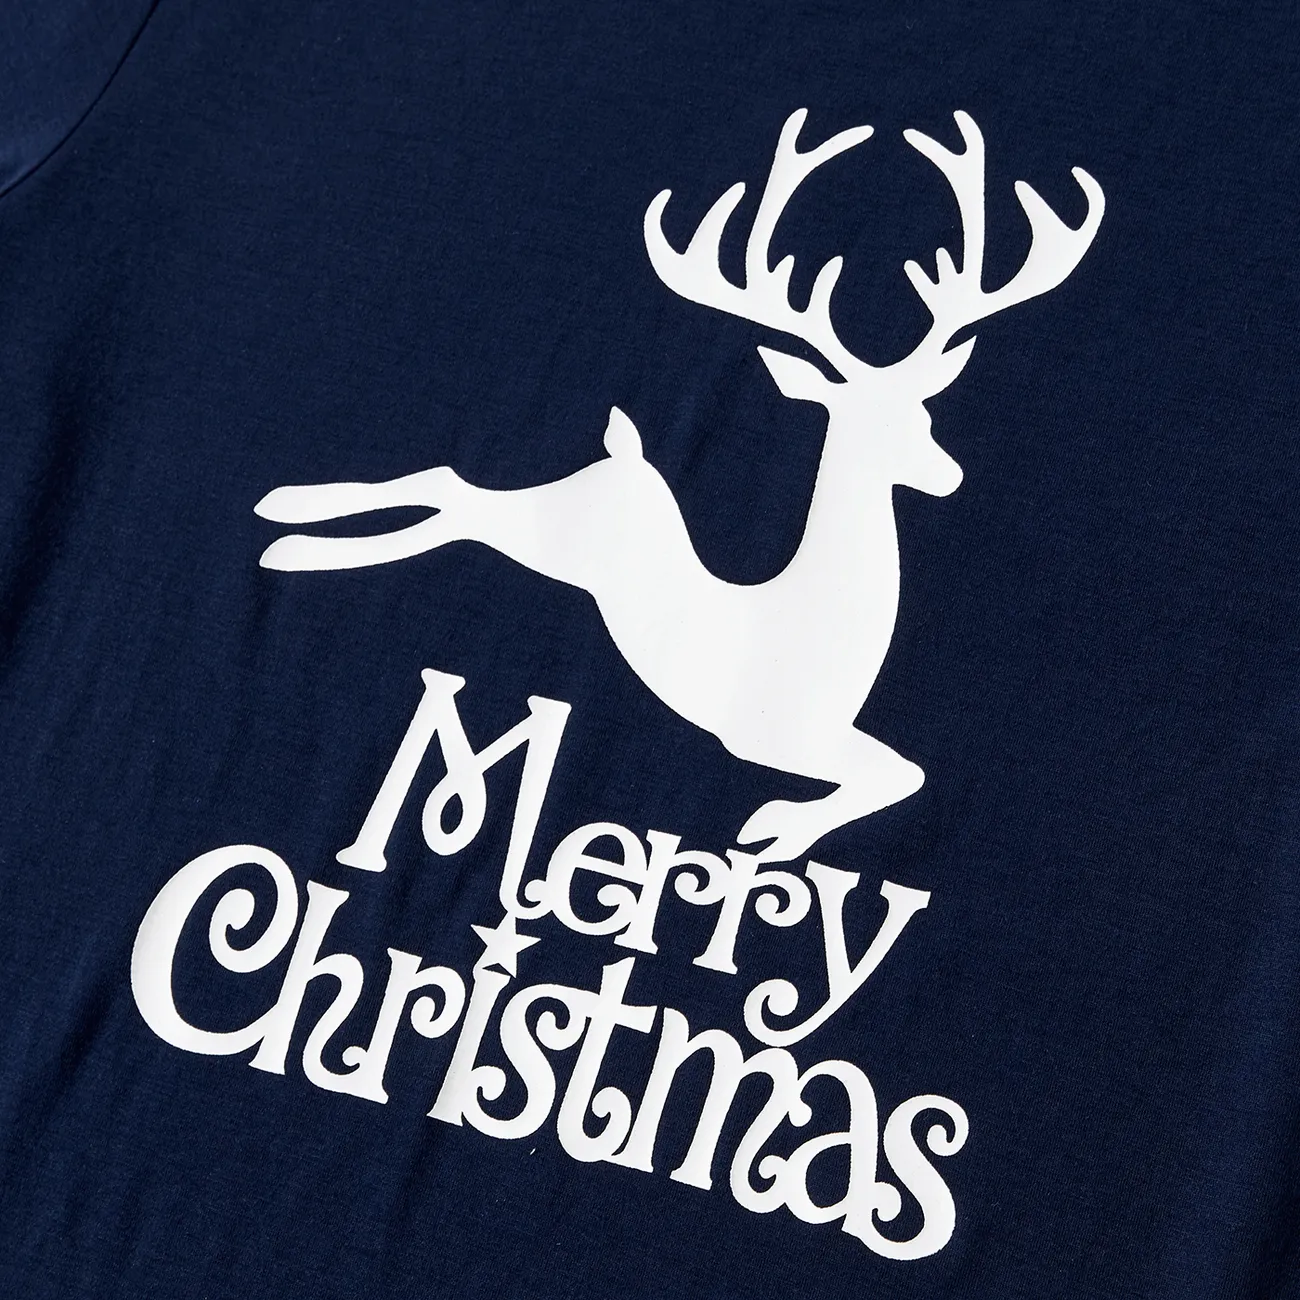 Christmas Reindeer Print Glow in the Dark Family Matching Pajamas Sets (Flame Resistant) Deep Blue big image 1